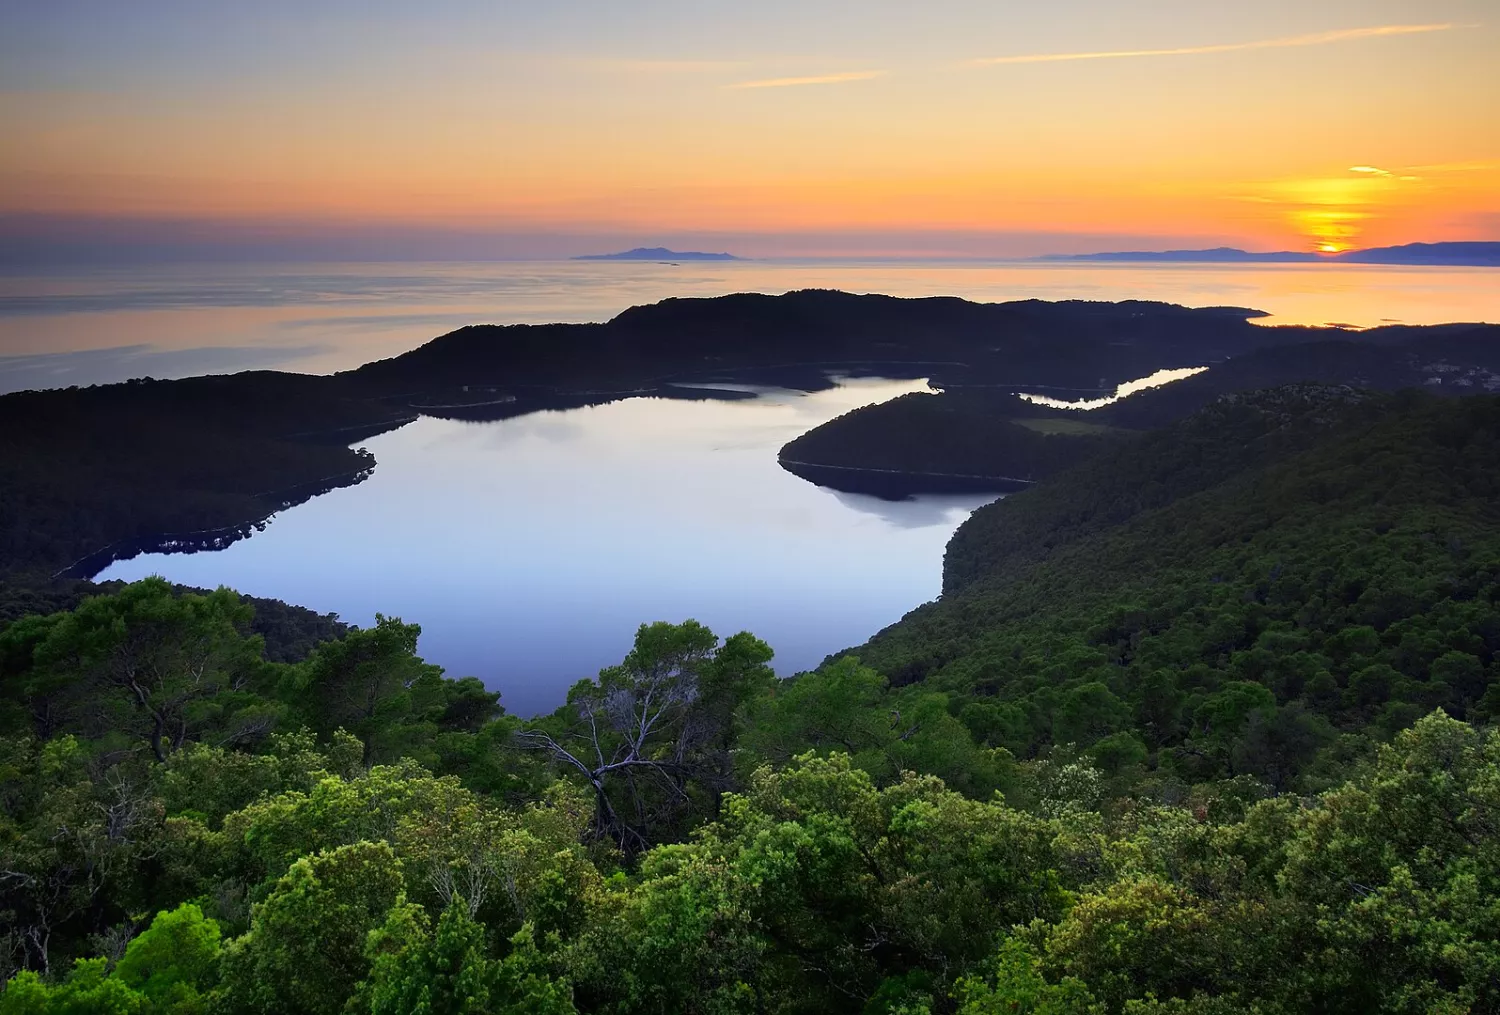 Sunset over the lakes on the island of Mljet - Croatia